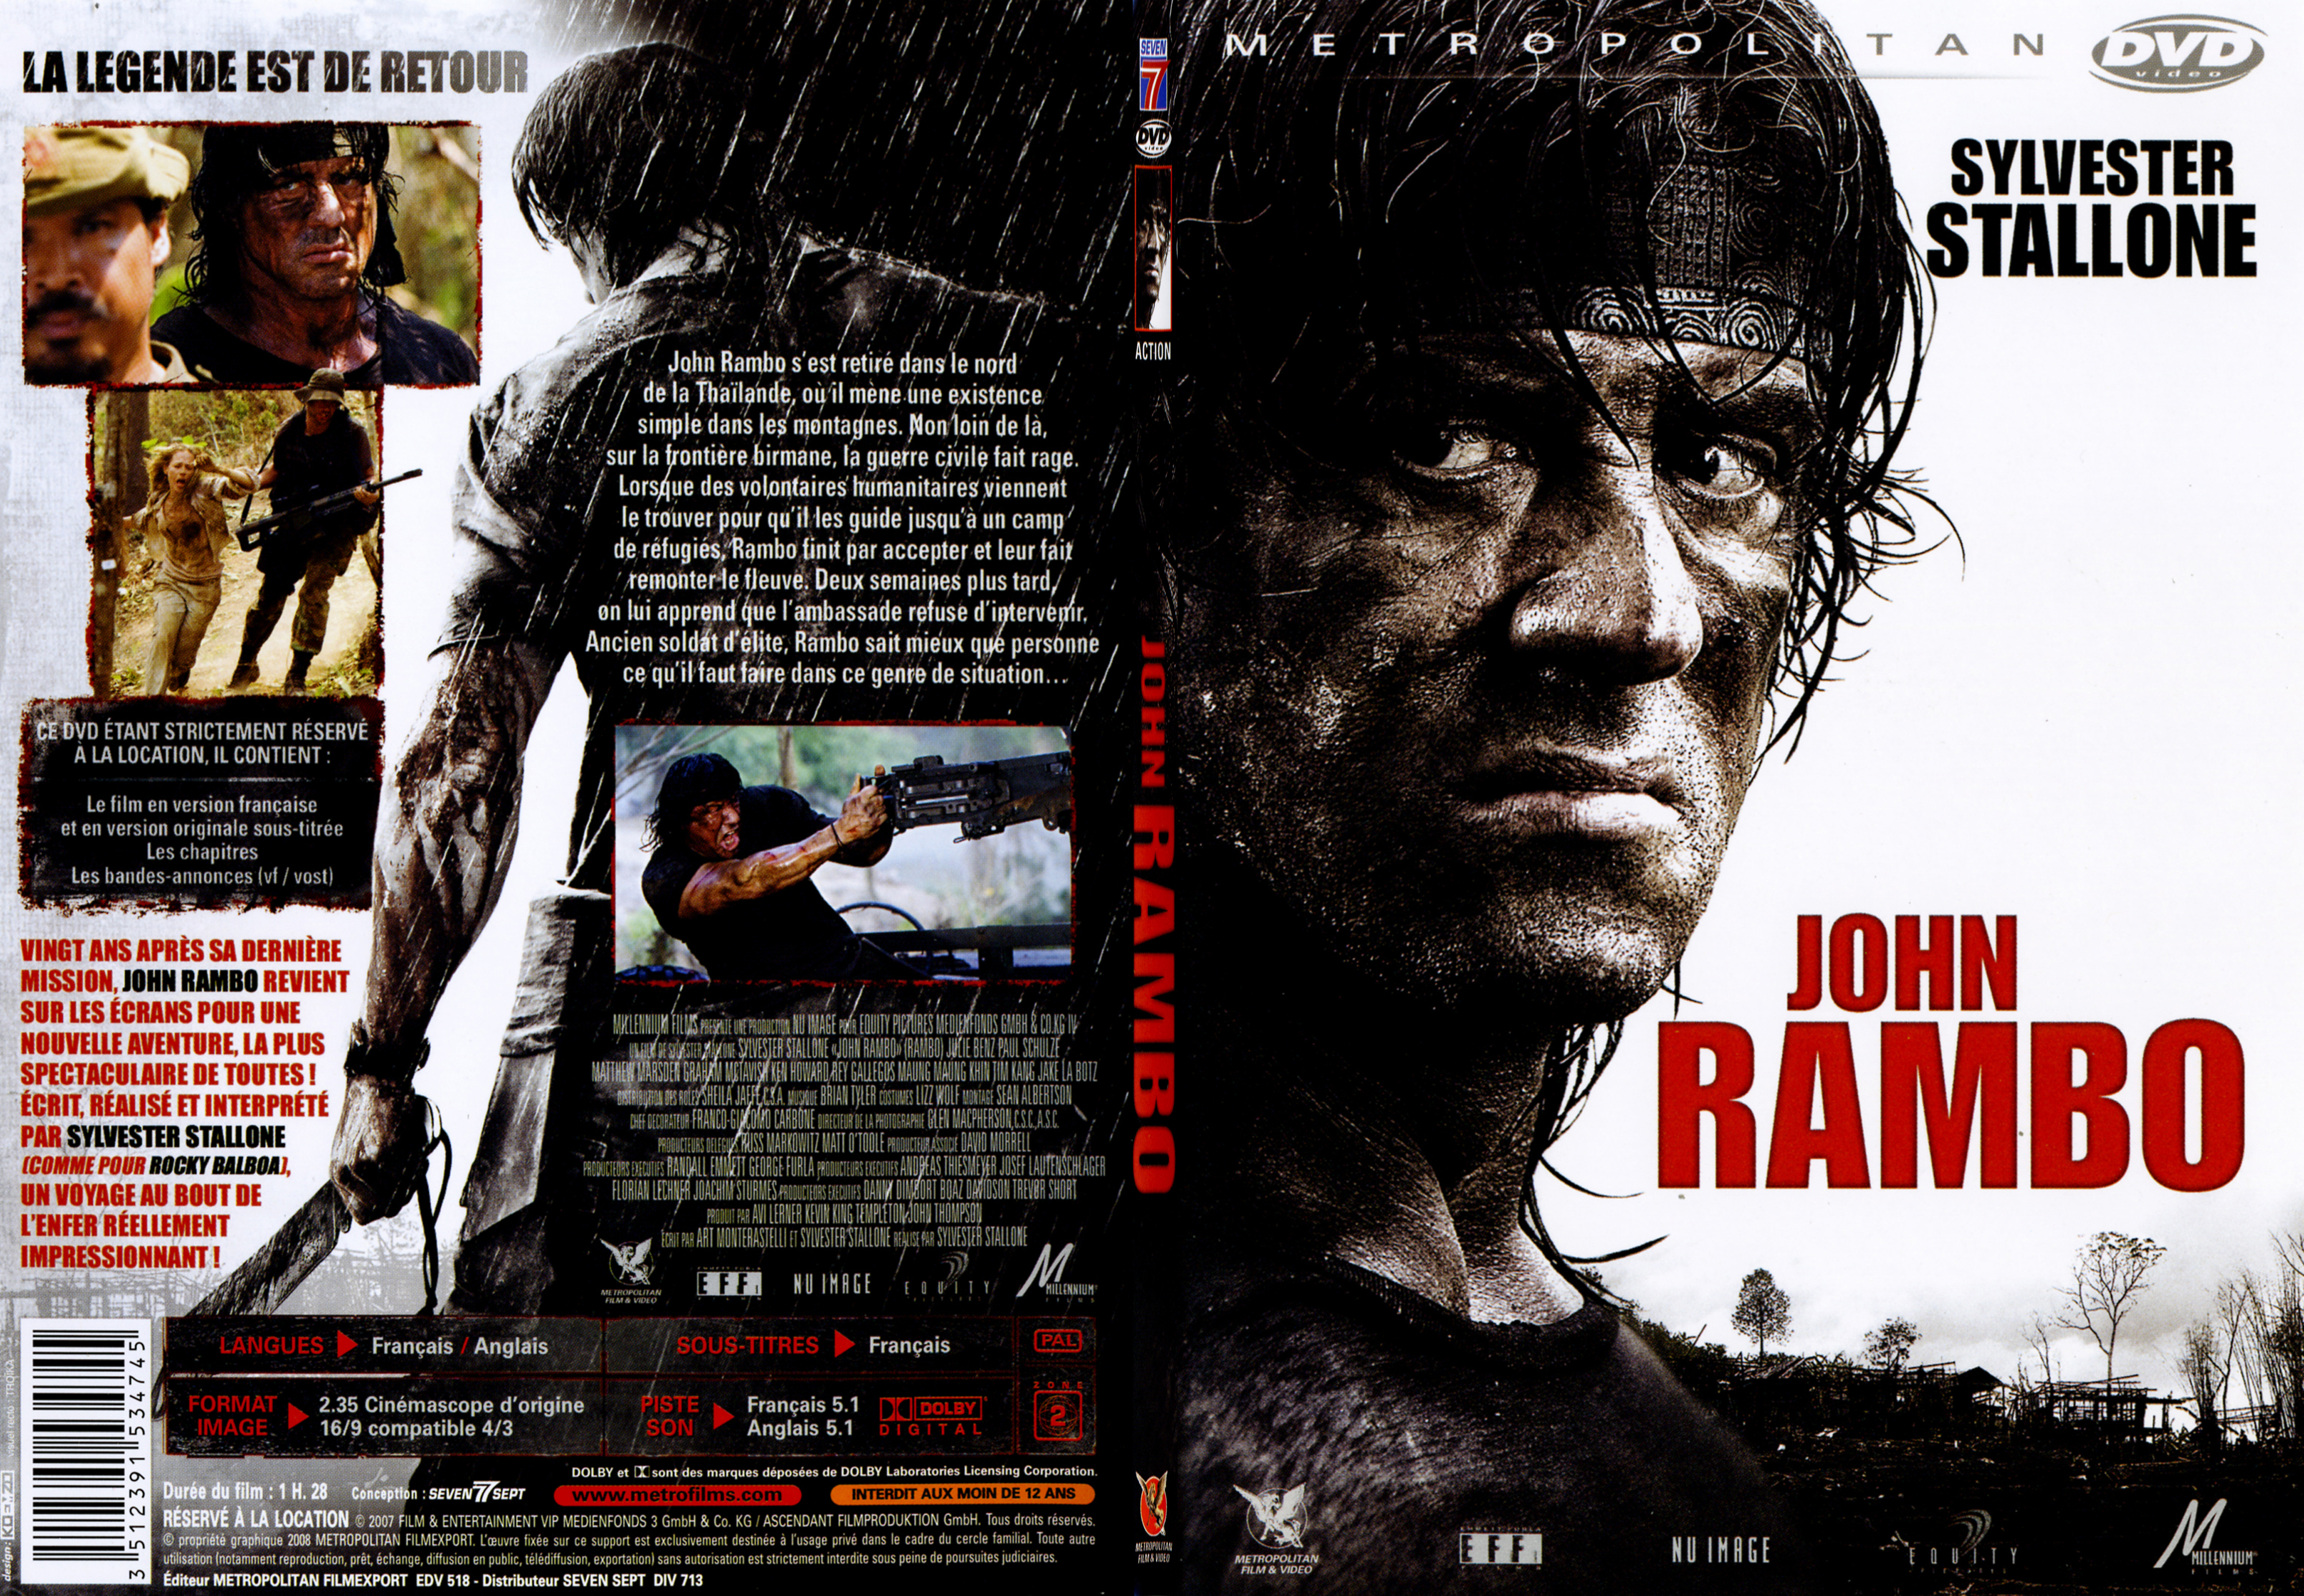 Jaquette DVD John Rambo - SLIM